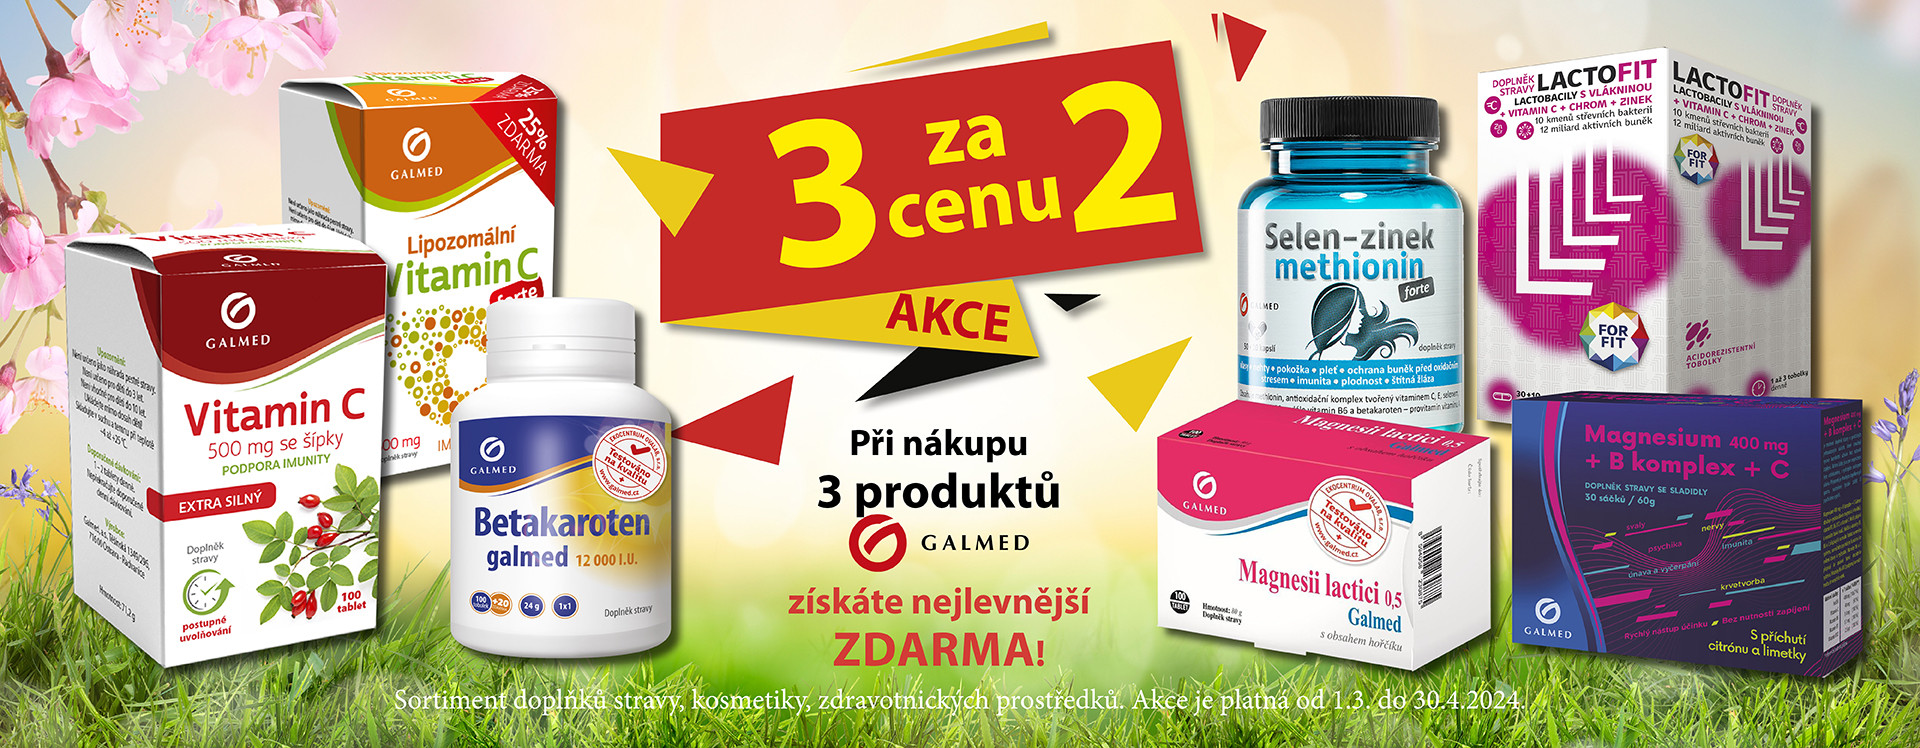 Onlinelekarna.cz | Galmed 3za2